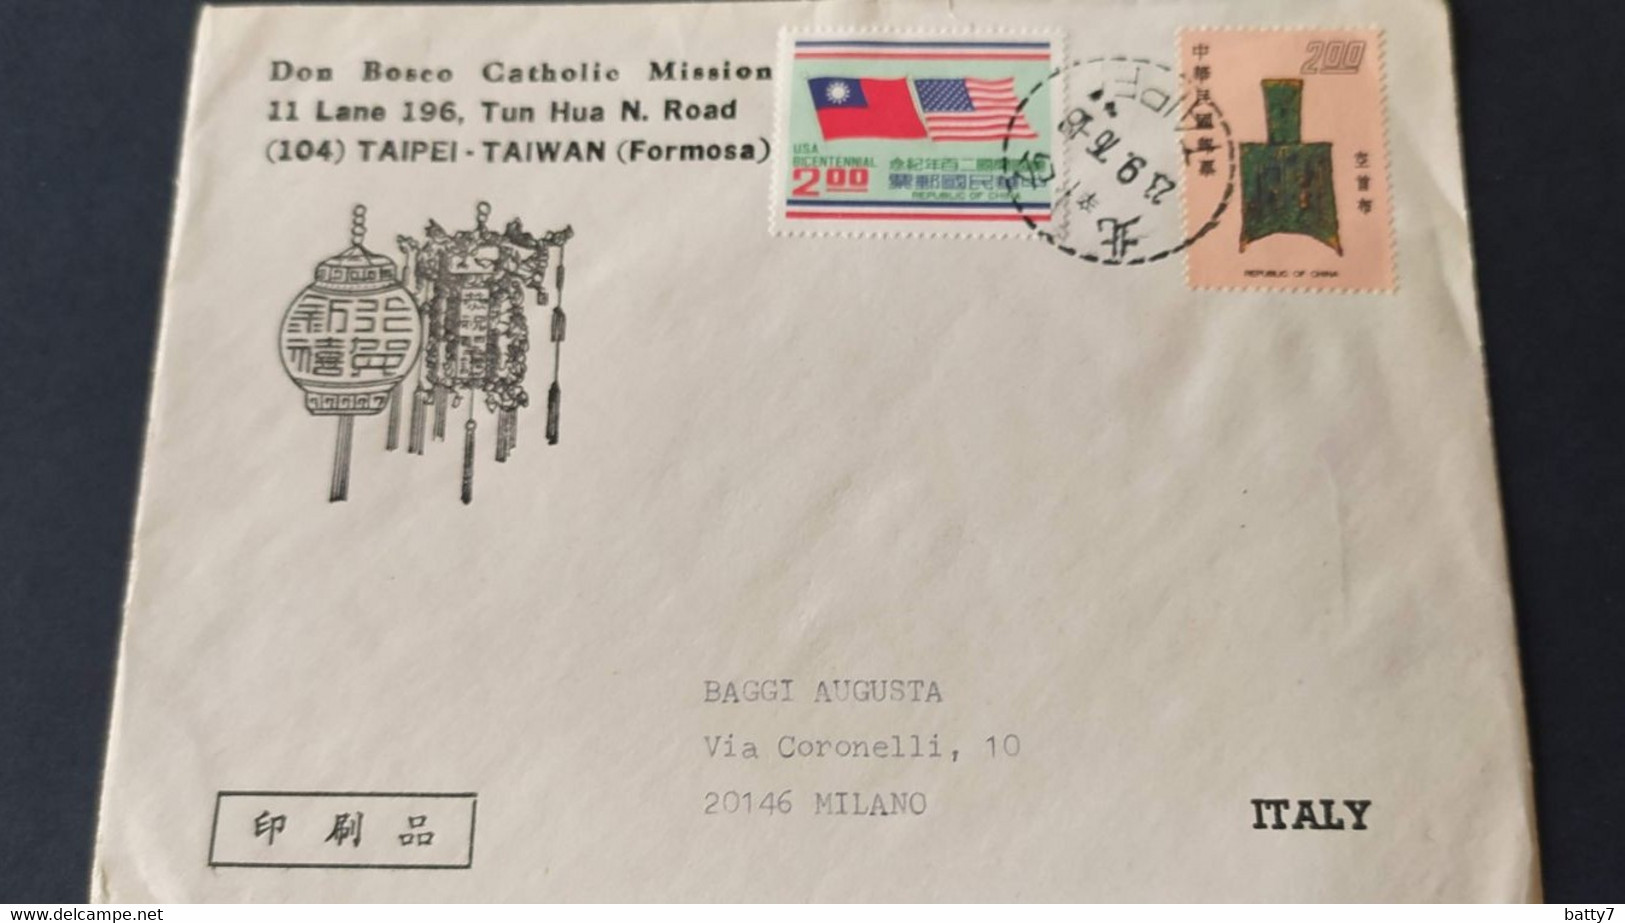 TAIWAN TAIPEI FORMOSA - DON BOSCO CATHOLIC MISSION - Briefe U. Dokumente